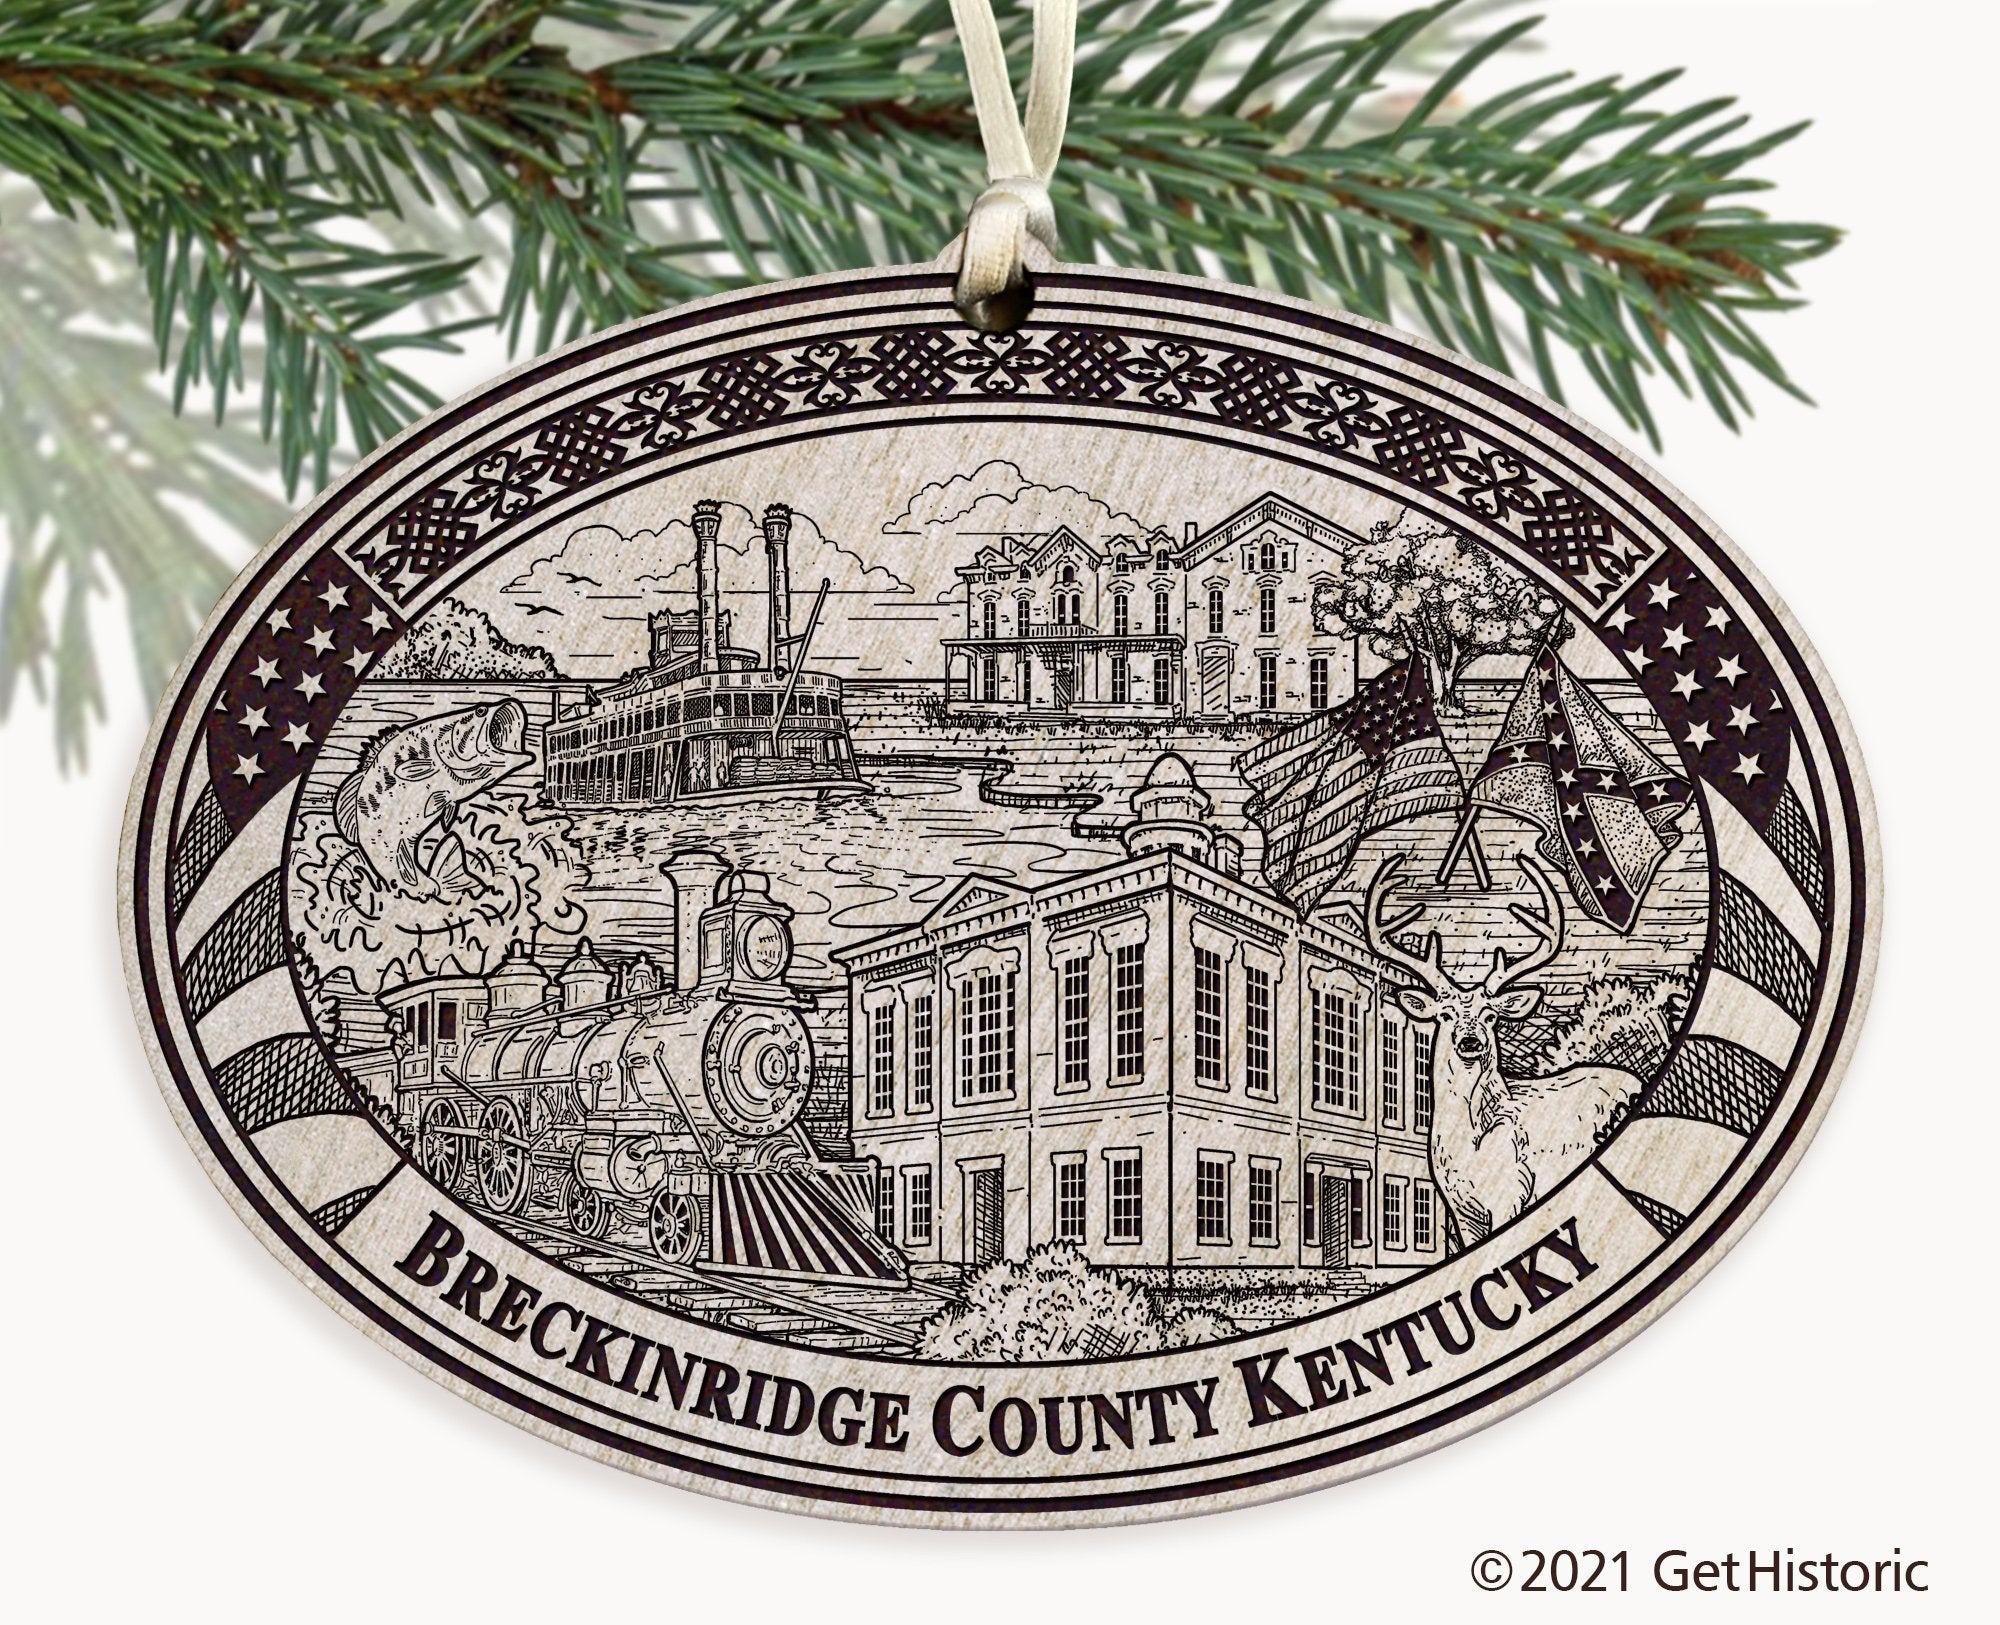 Breckinridge County Kentucky Engraved Ornament